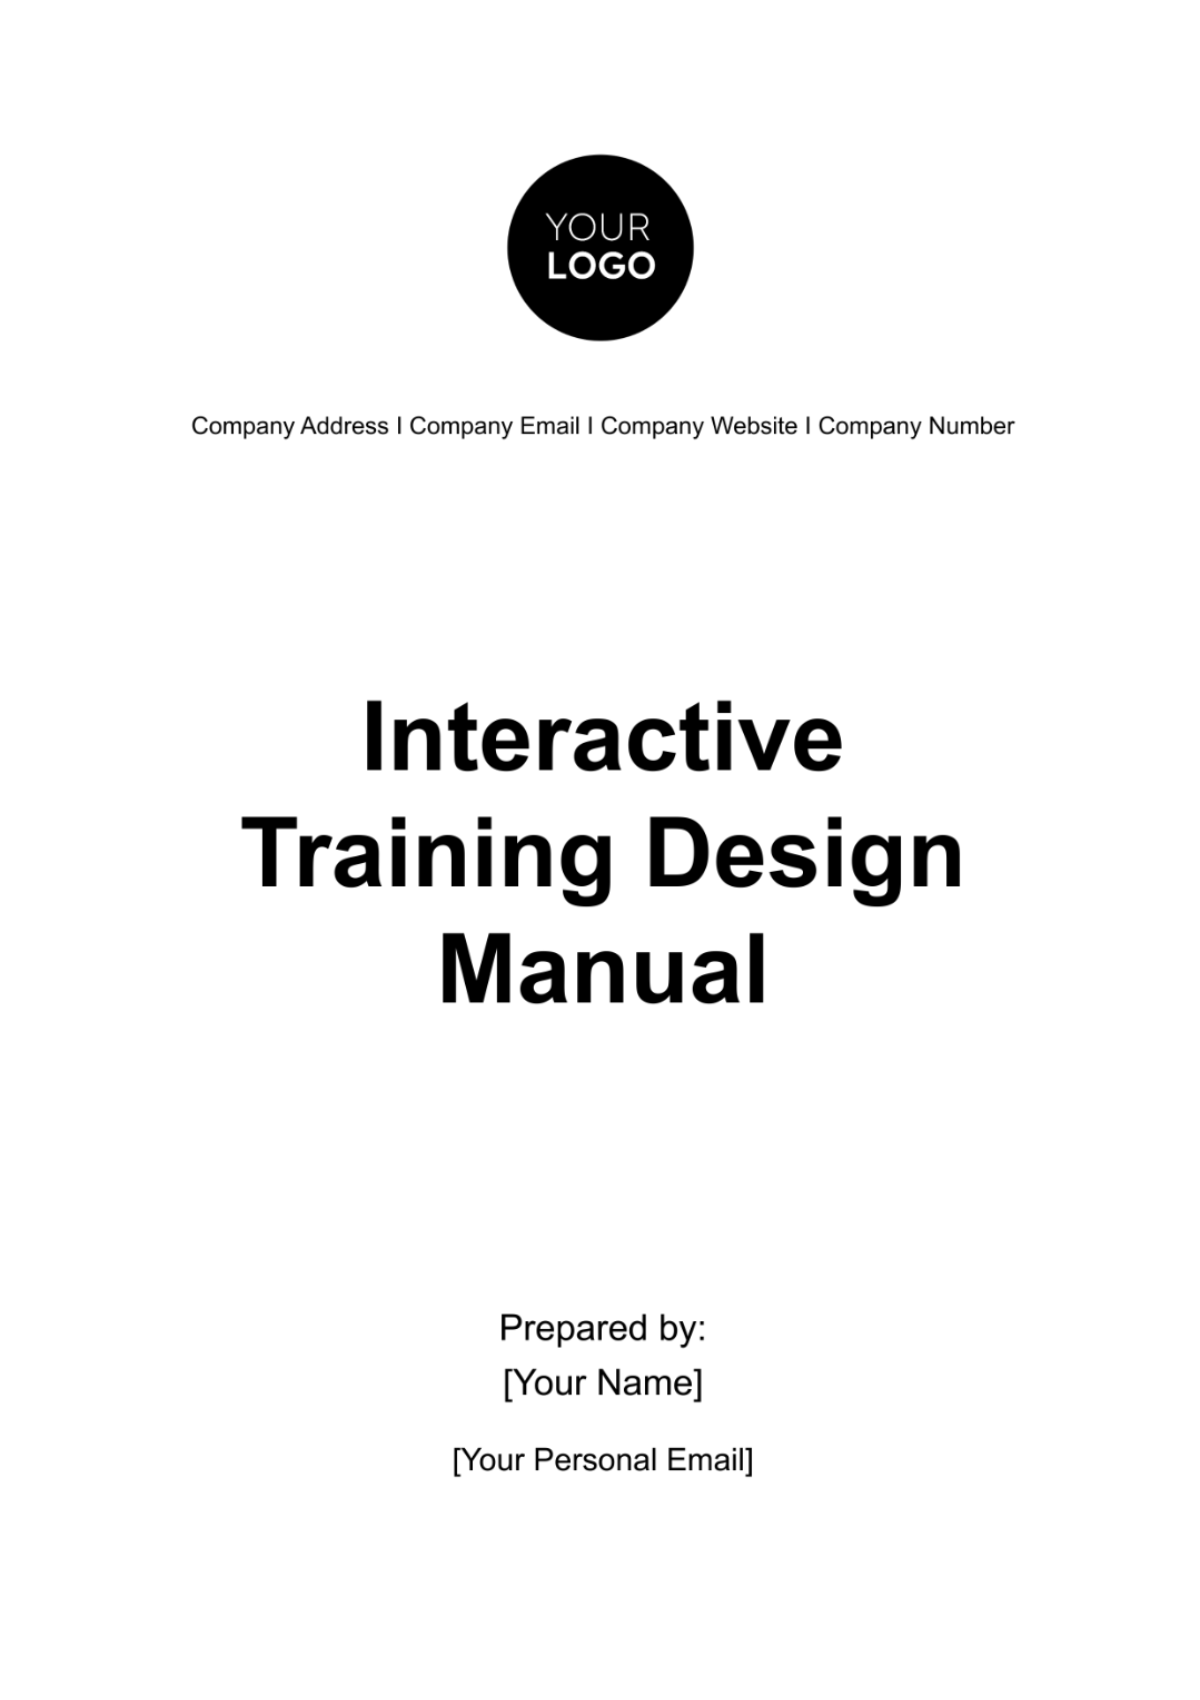 Free Interactive Training Design Manual HR Template